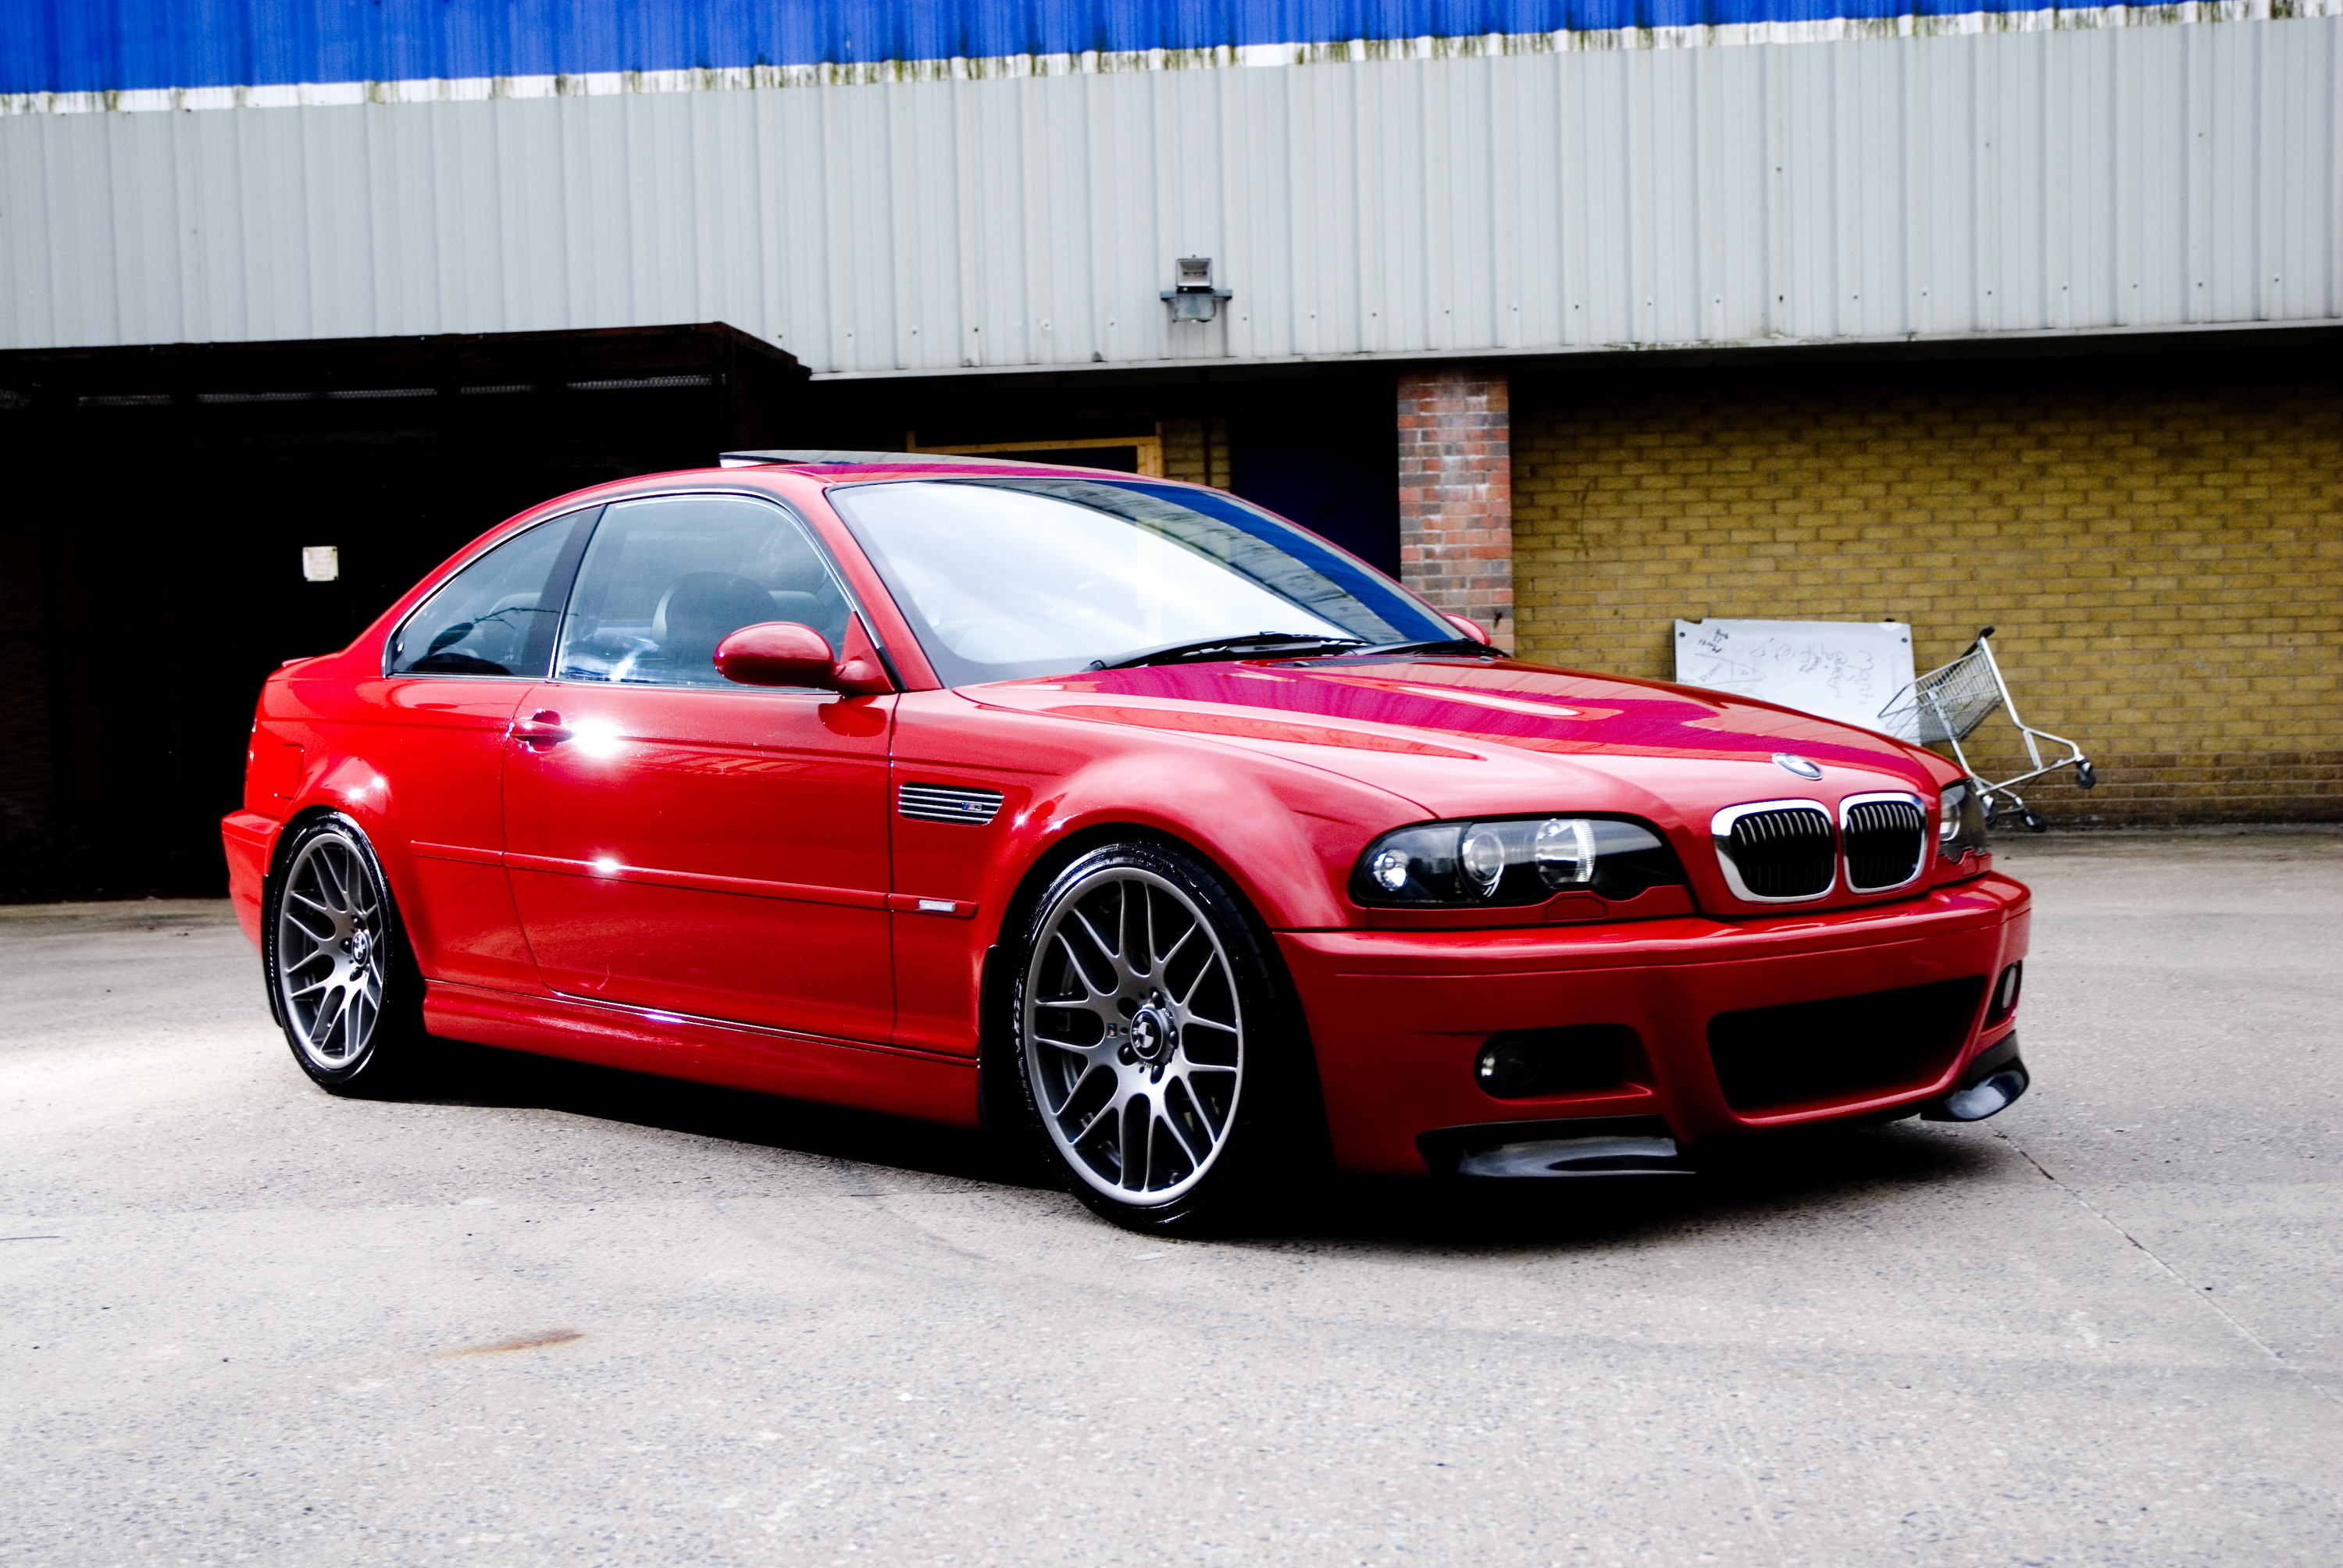 E46 coupe. BMW m3 e46 2000. BMW e46 Coupe. BMW m3 e46 красная. BMW m3 e46 купе.